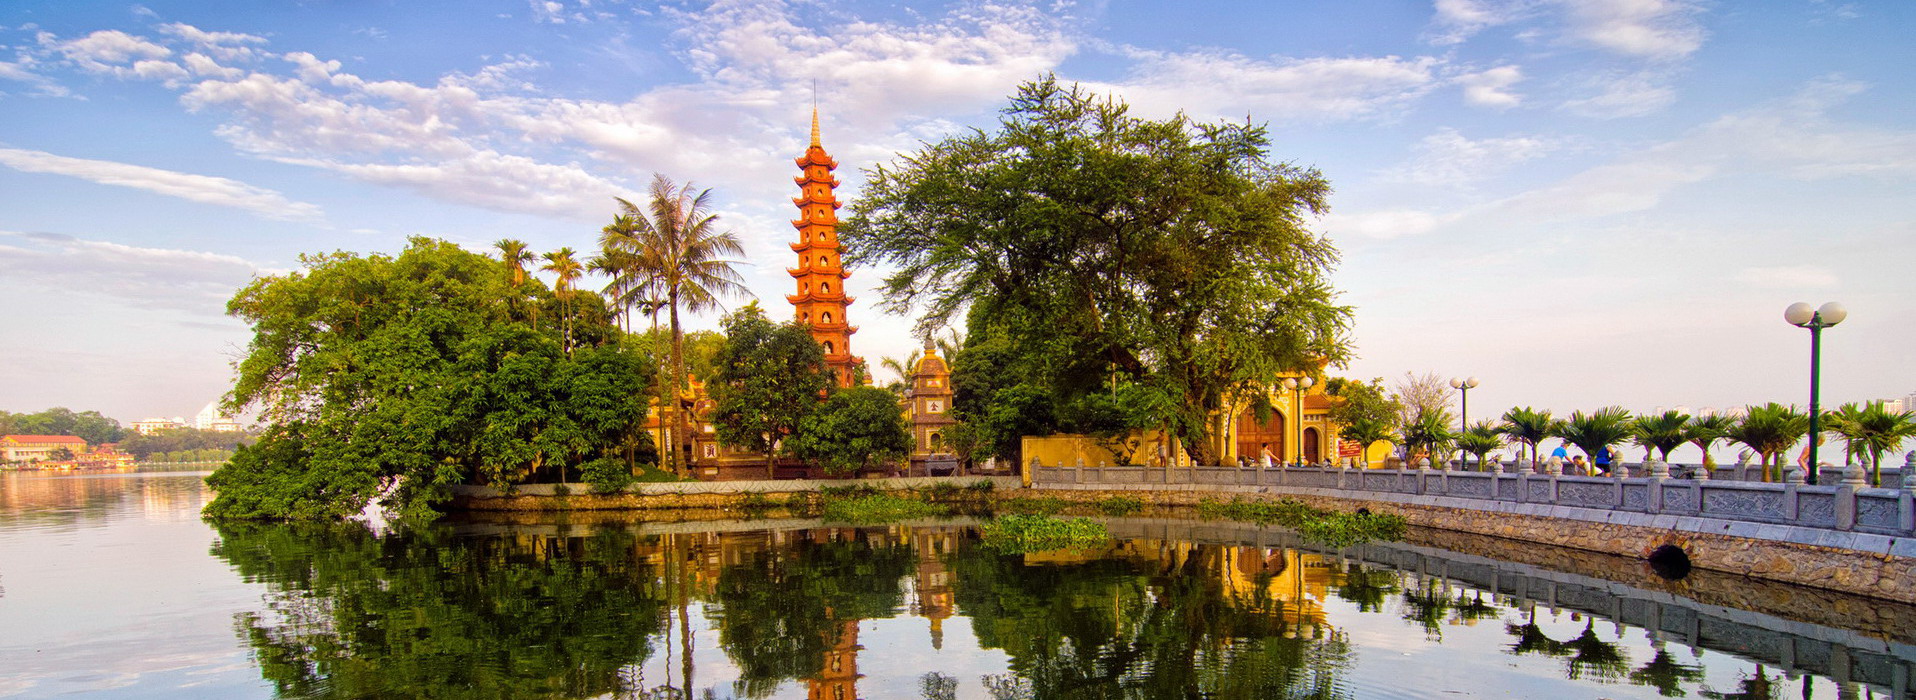 Hanoi But Thap Pagoda